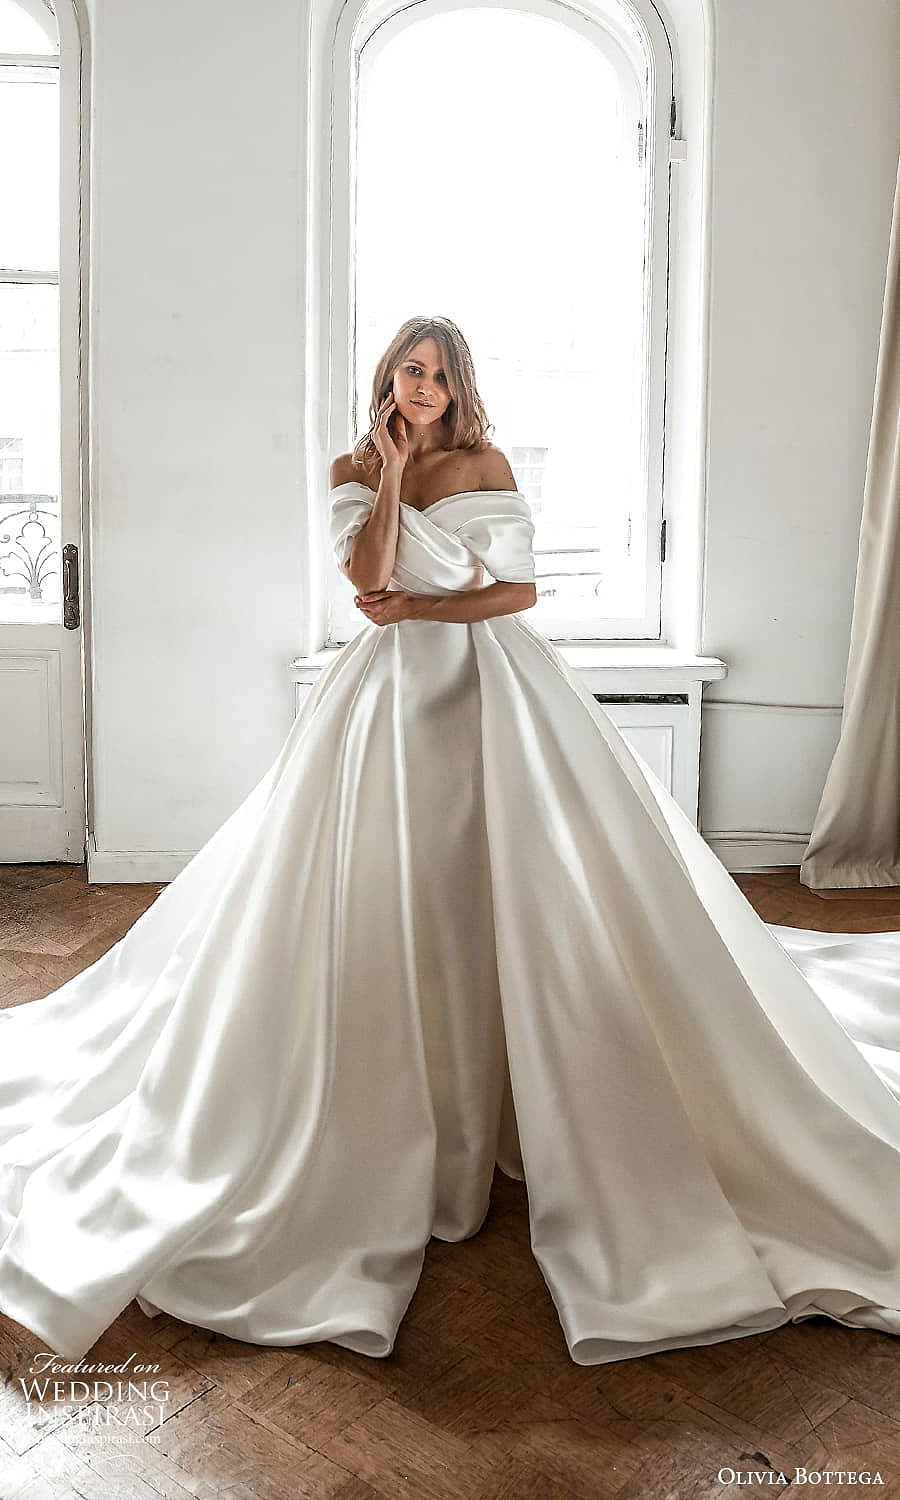 Olivia Bottega Pret-a-Porter 新娘系列 优雅百搭新娘嫁衣 - 32